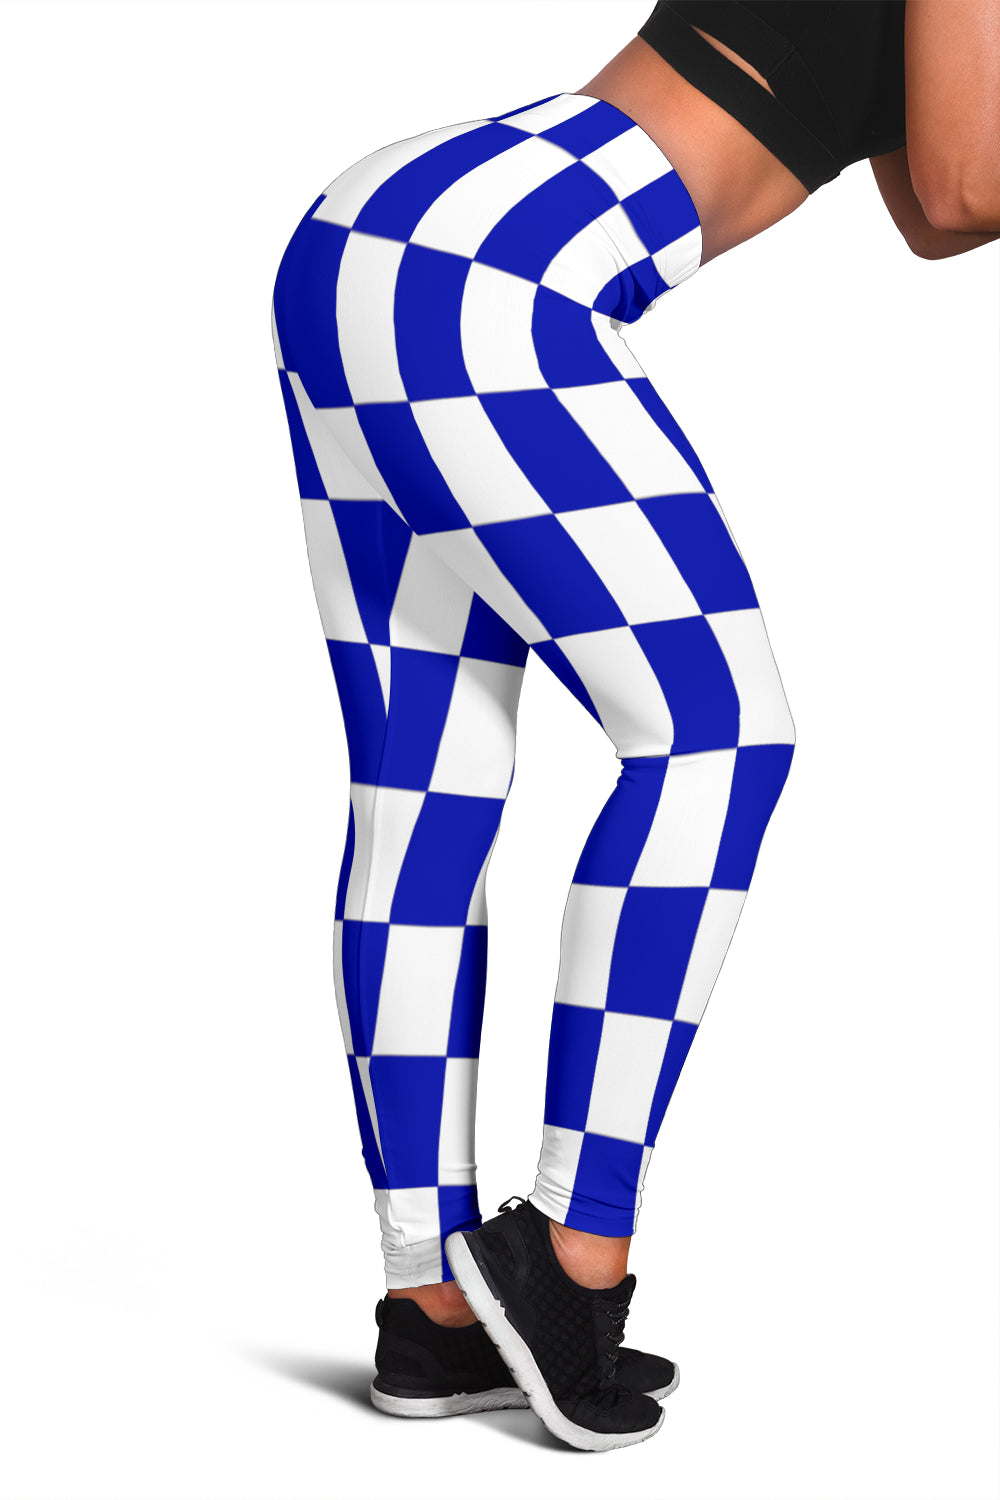 Racing Blue Checkered Leggings